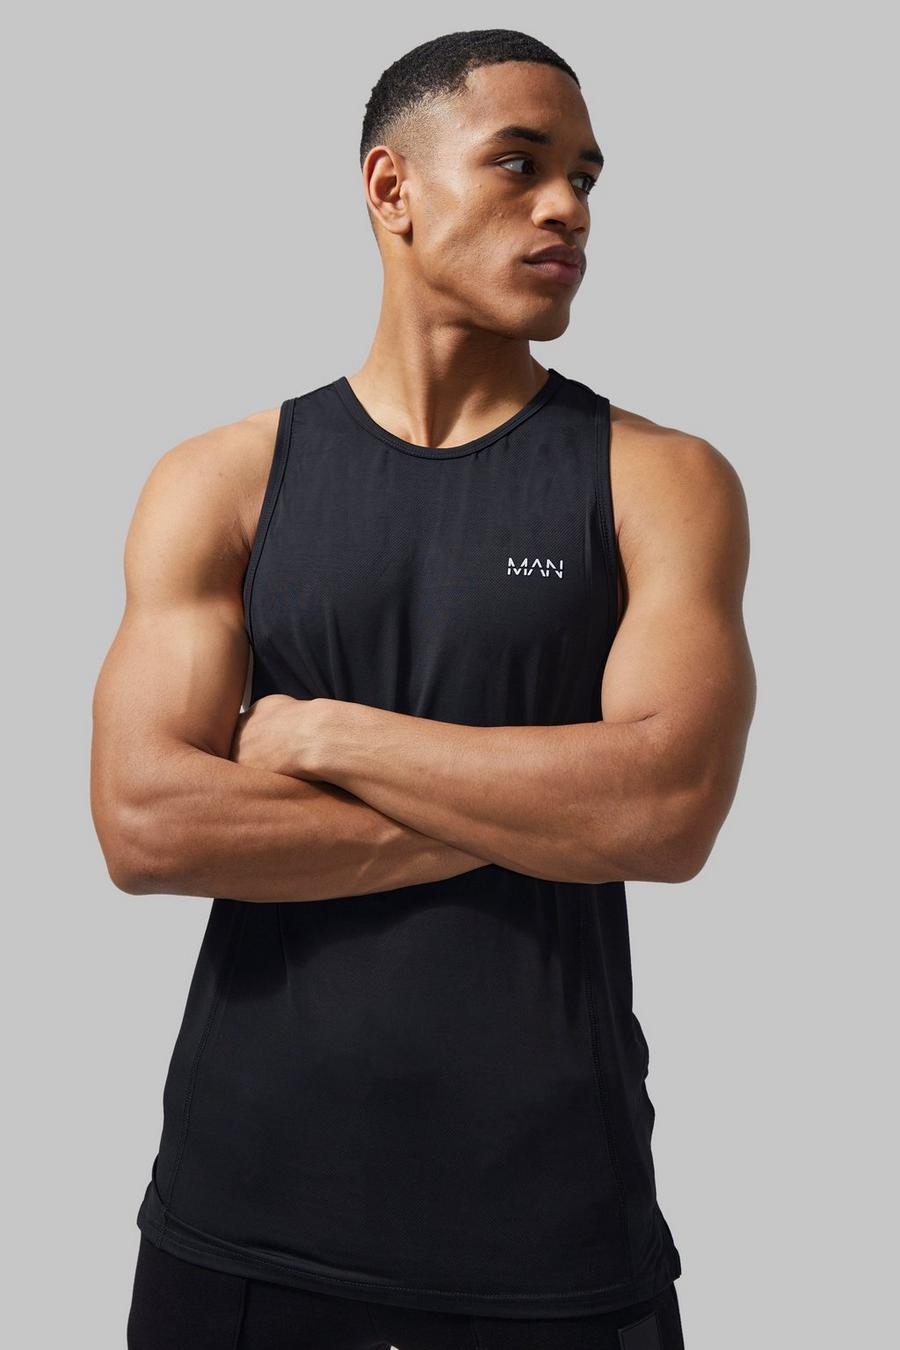 Camiseta sin mangas MAN Active ligera jaspeada estilo nadador, Black nero image number 1